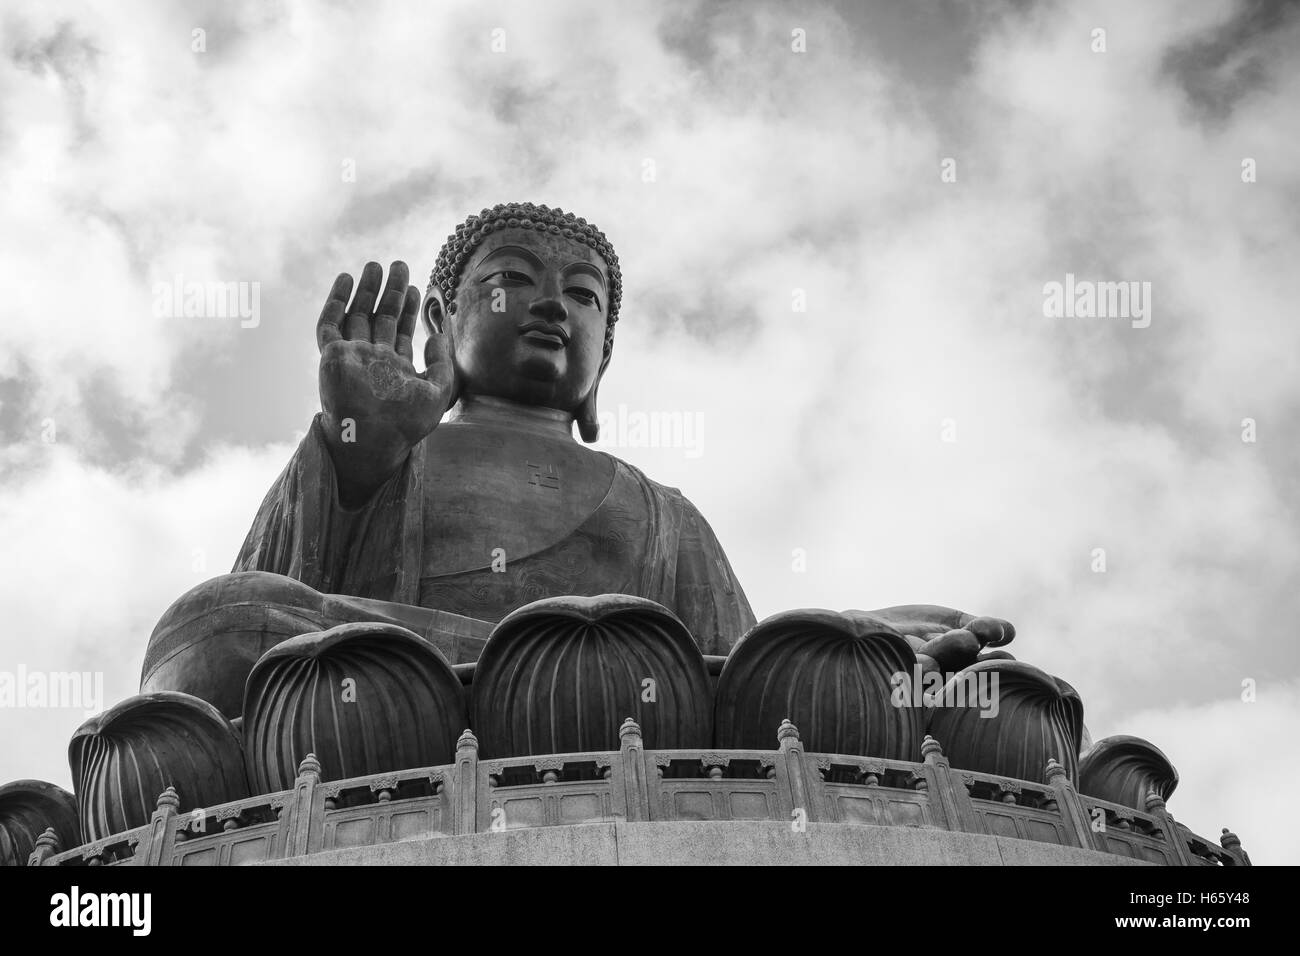 Tian Tan Buddha (Big Buddha) Statue in schwarz & weiß bei Ngong Ping auf Lantau Island in Hongkong, China, Ansicht von unten. Stockfoto